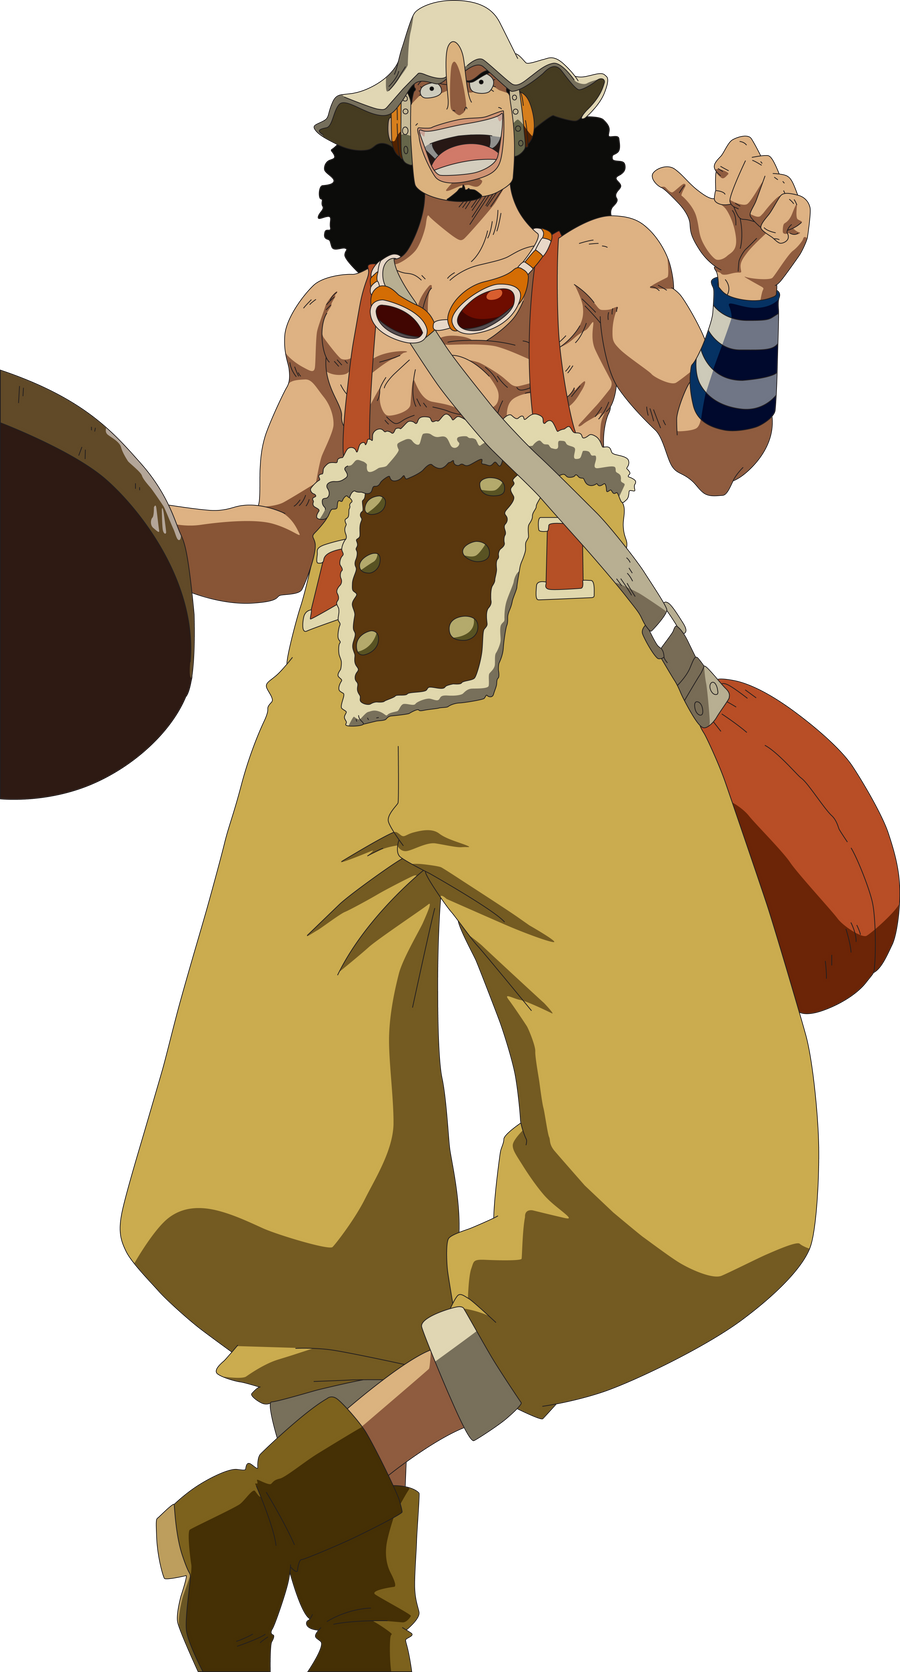 Nami - One Piece Episode 819 by StrawhatLuffy05 on DeviantArt